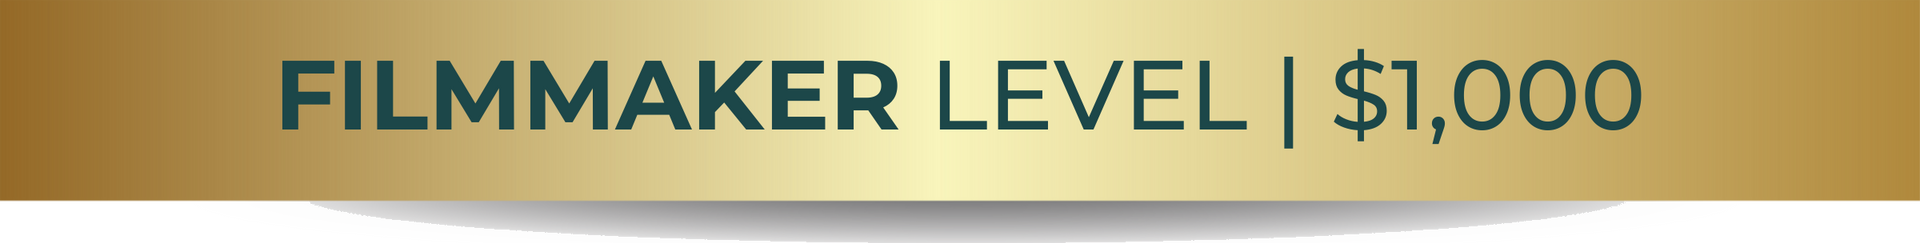 A gold banner that says filmmaker level $ 1,000